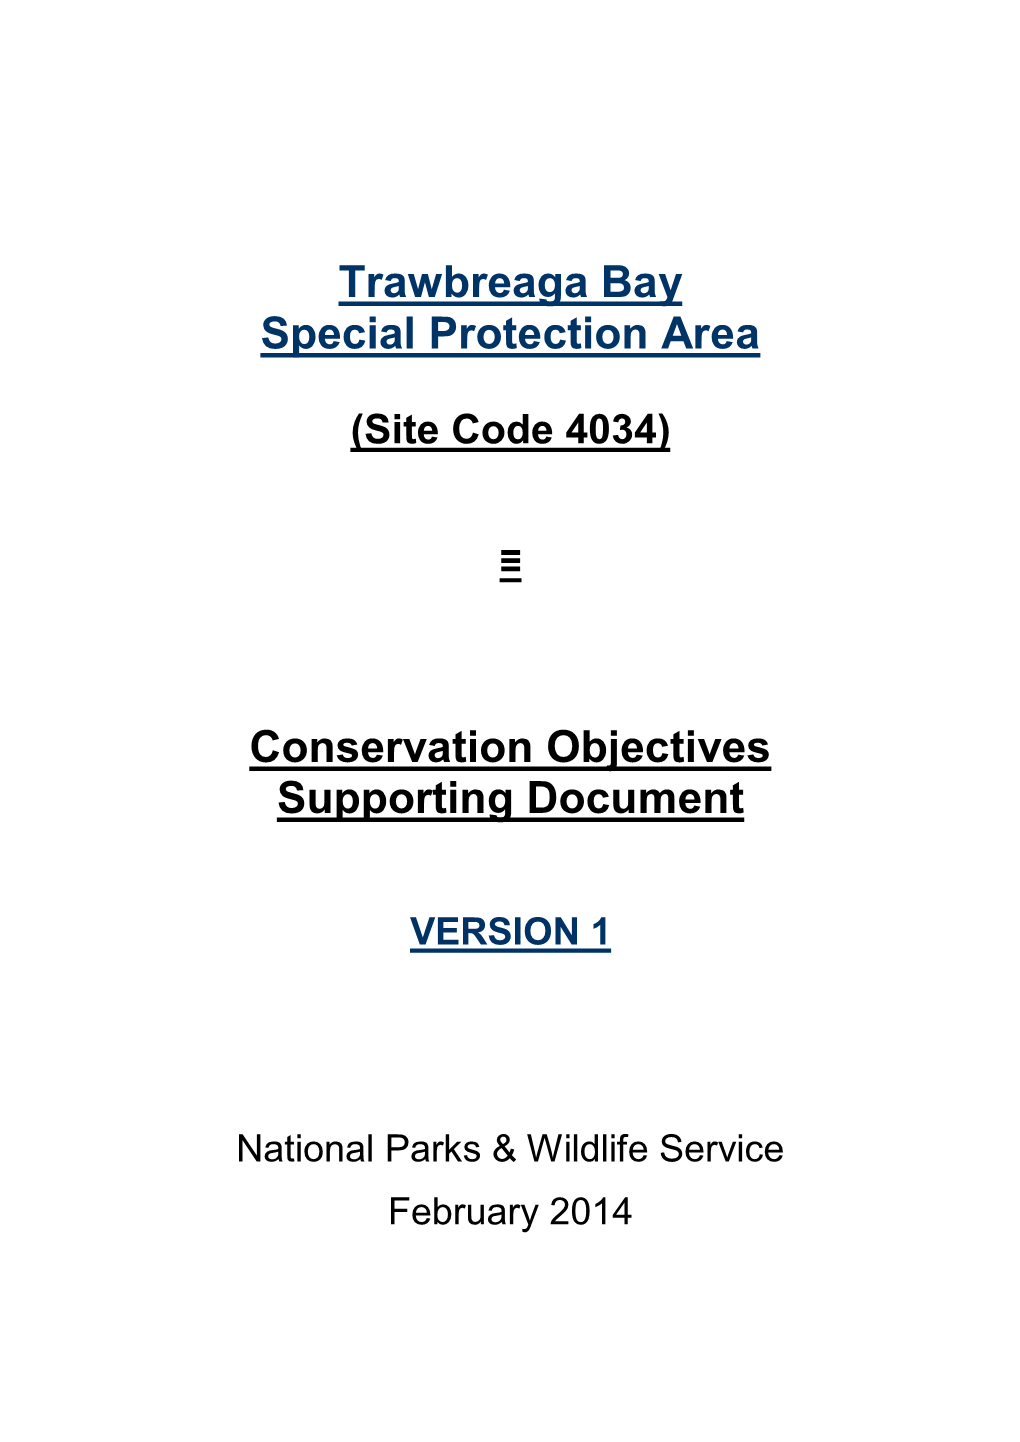 Trawbreaga Bay Special Protection Area Conservation Objectives